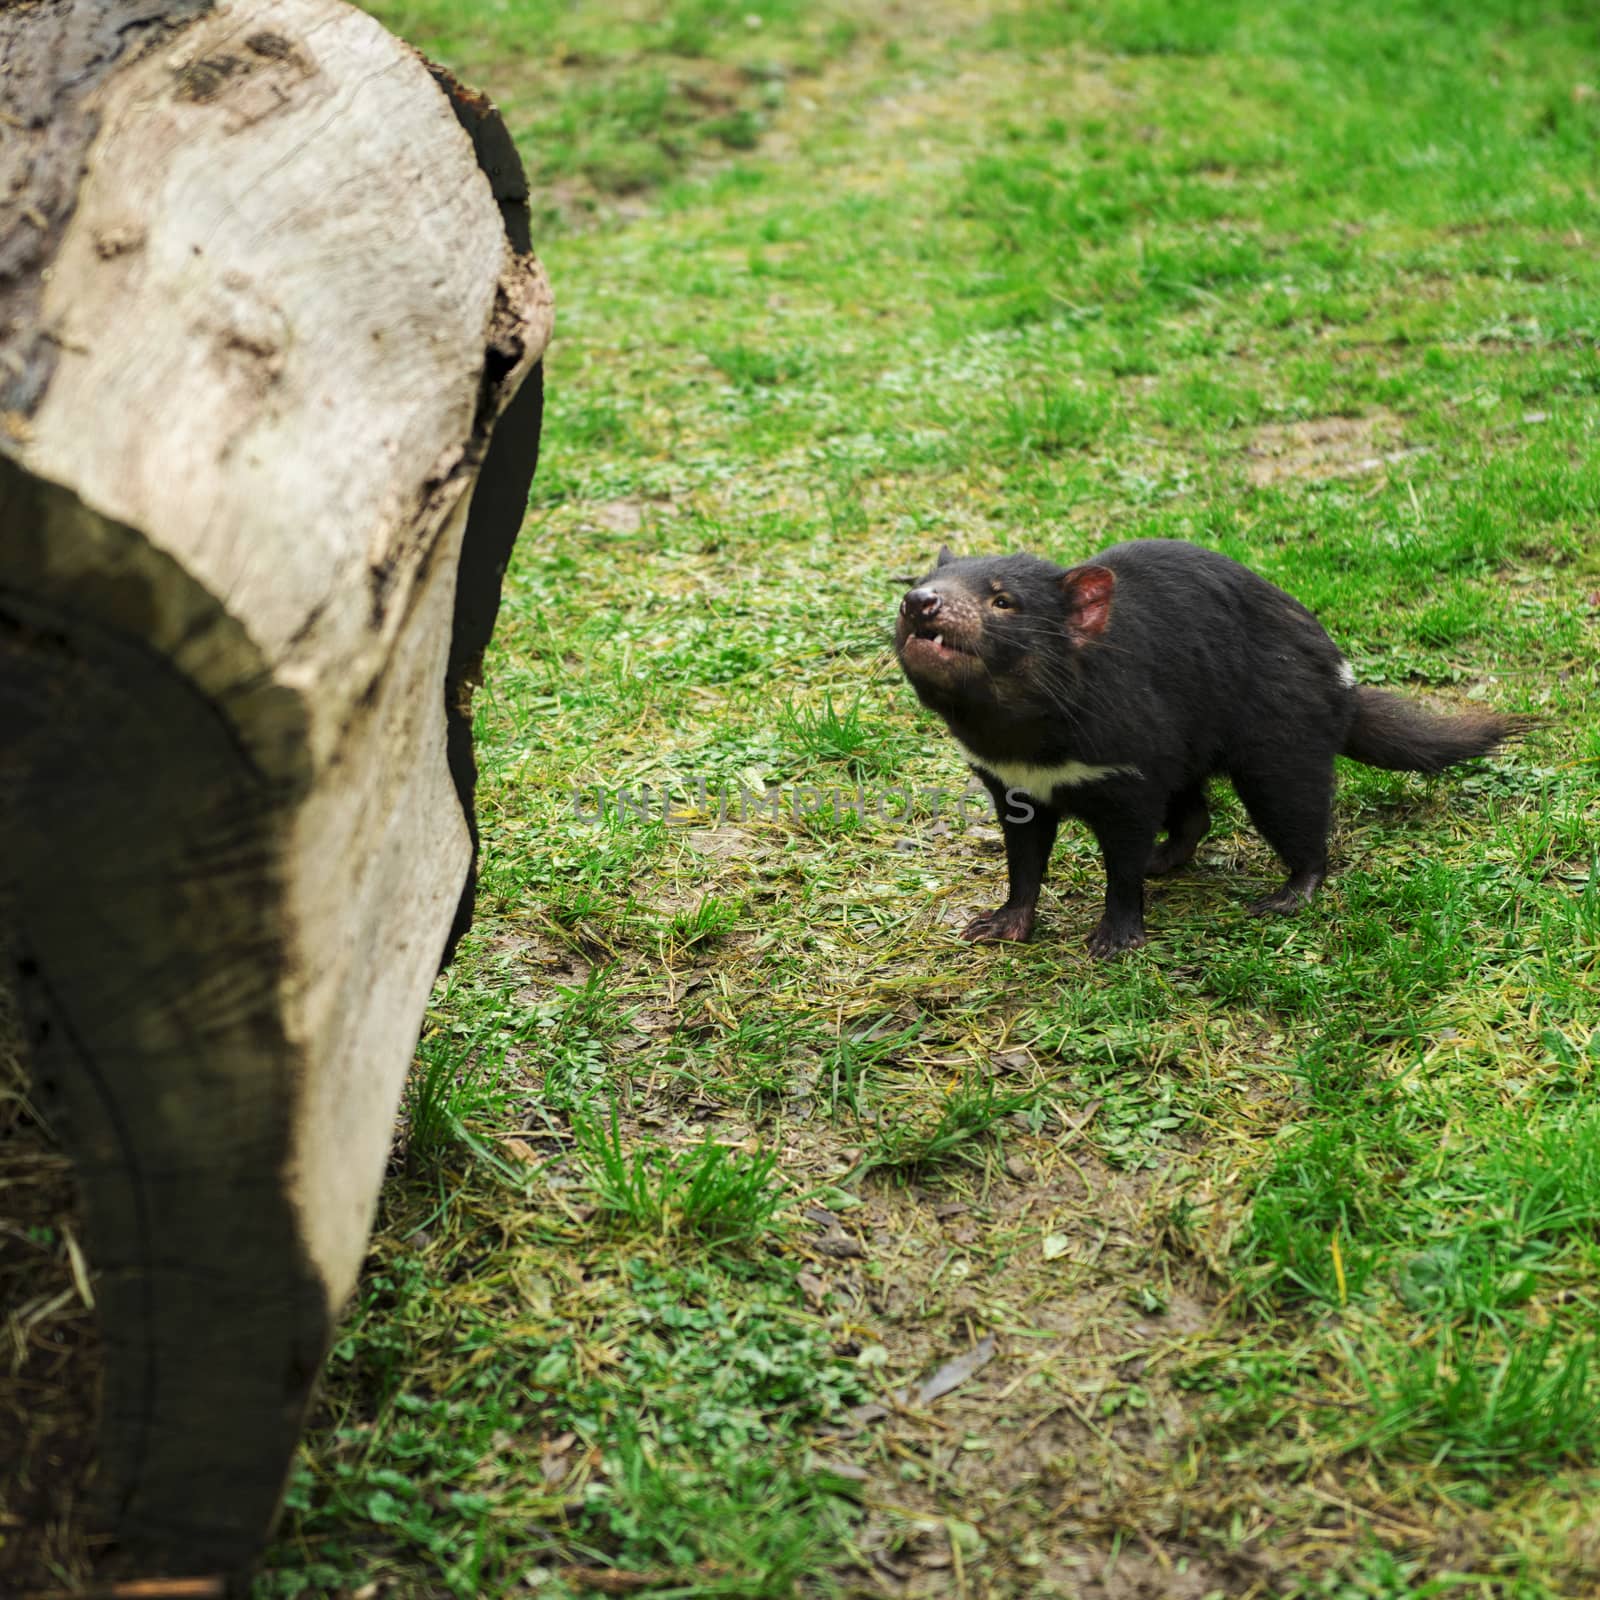 Tasmanian Devil found during the day in Tasmania. by artistrobd